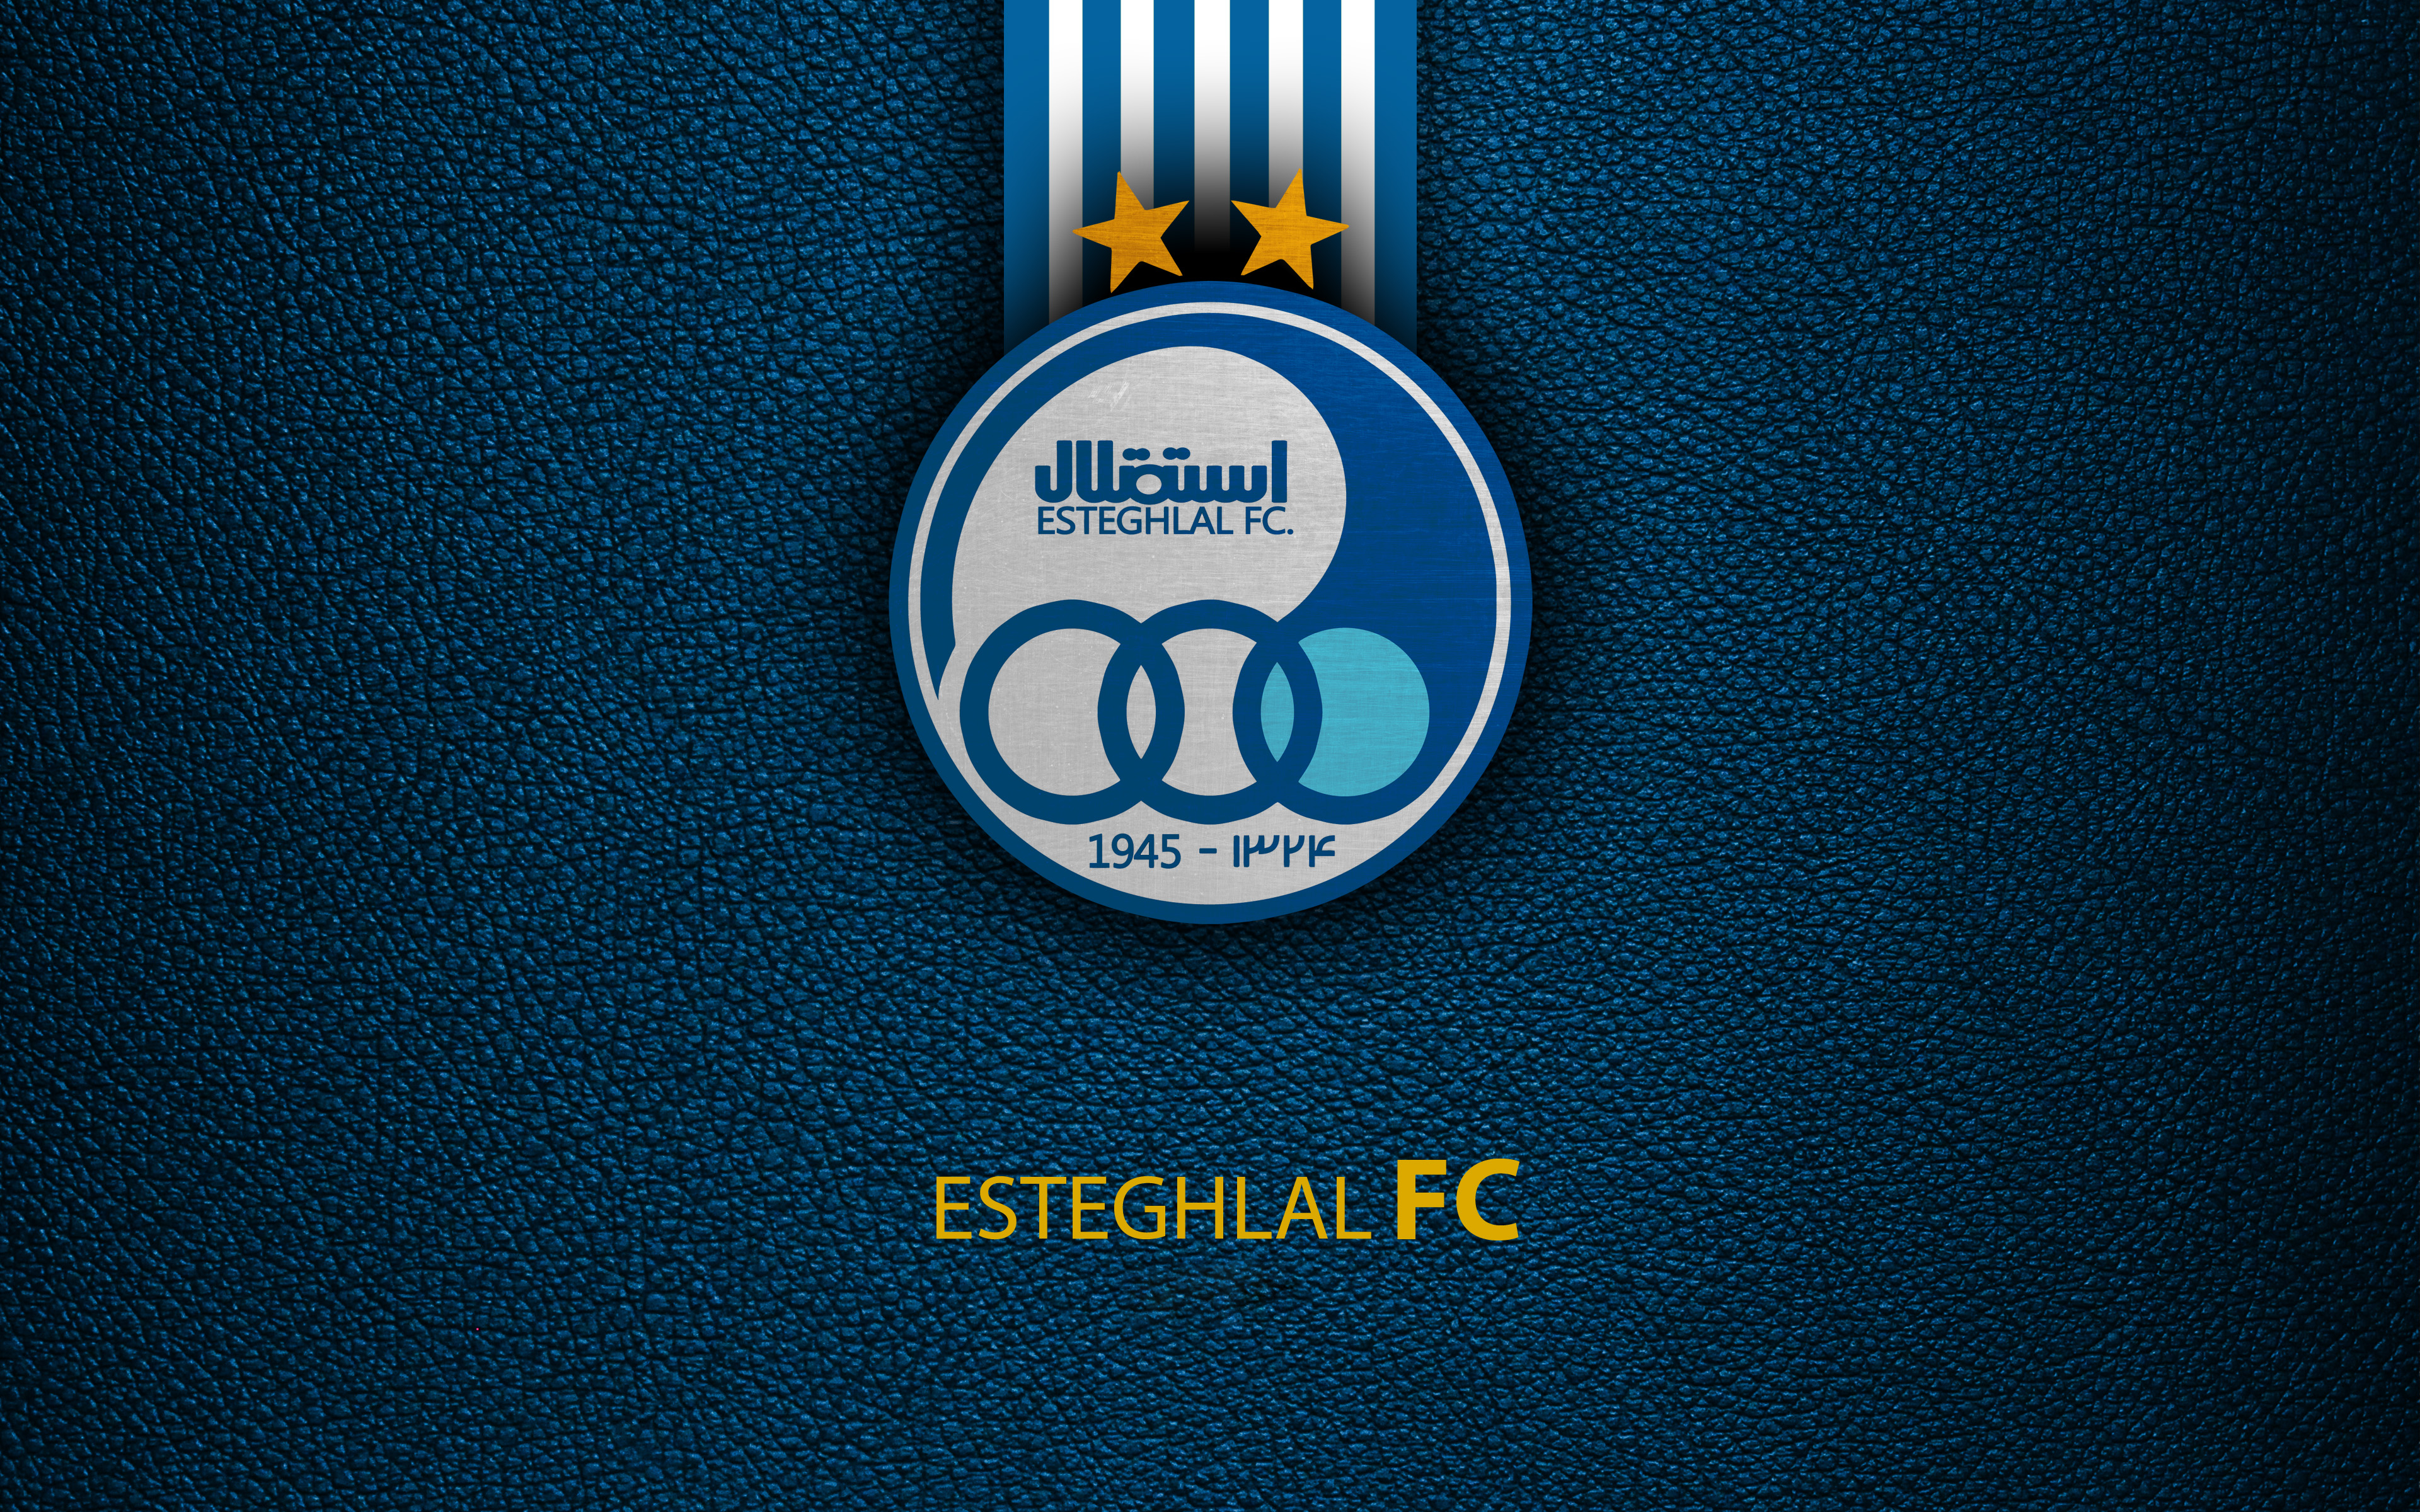 Esteghlal F C 4k Ultra HD Wallpaper Background Image